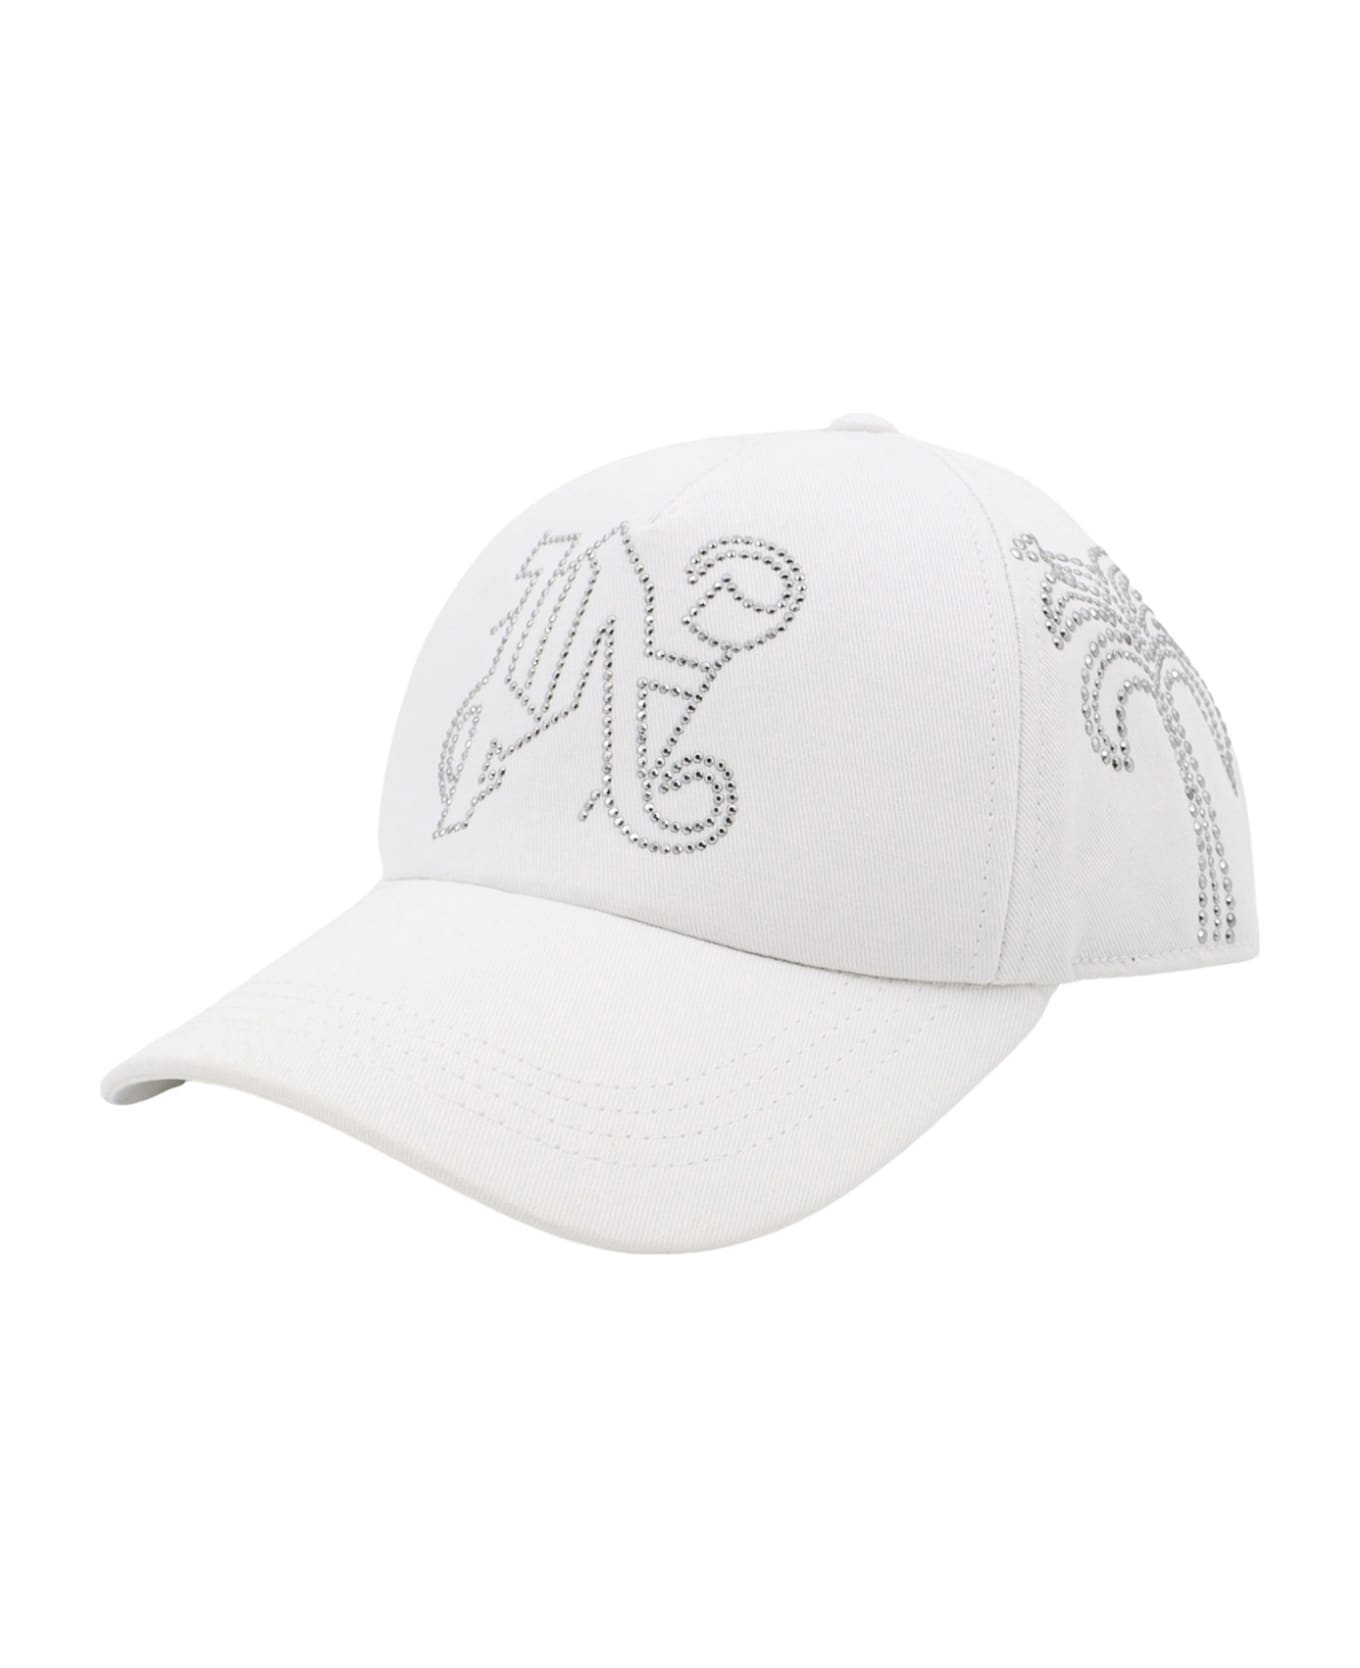 Palm Angels Baseball Cap - White